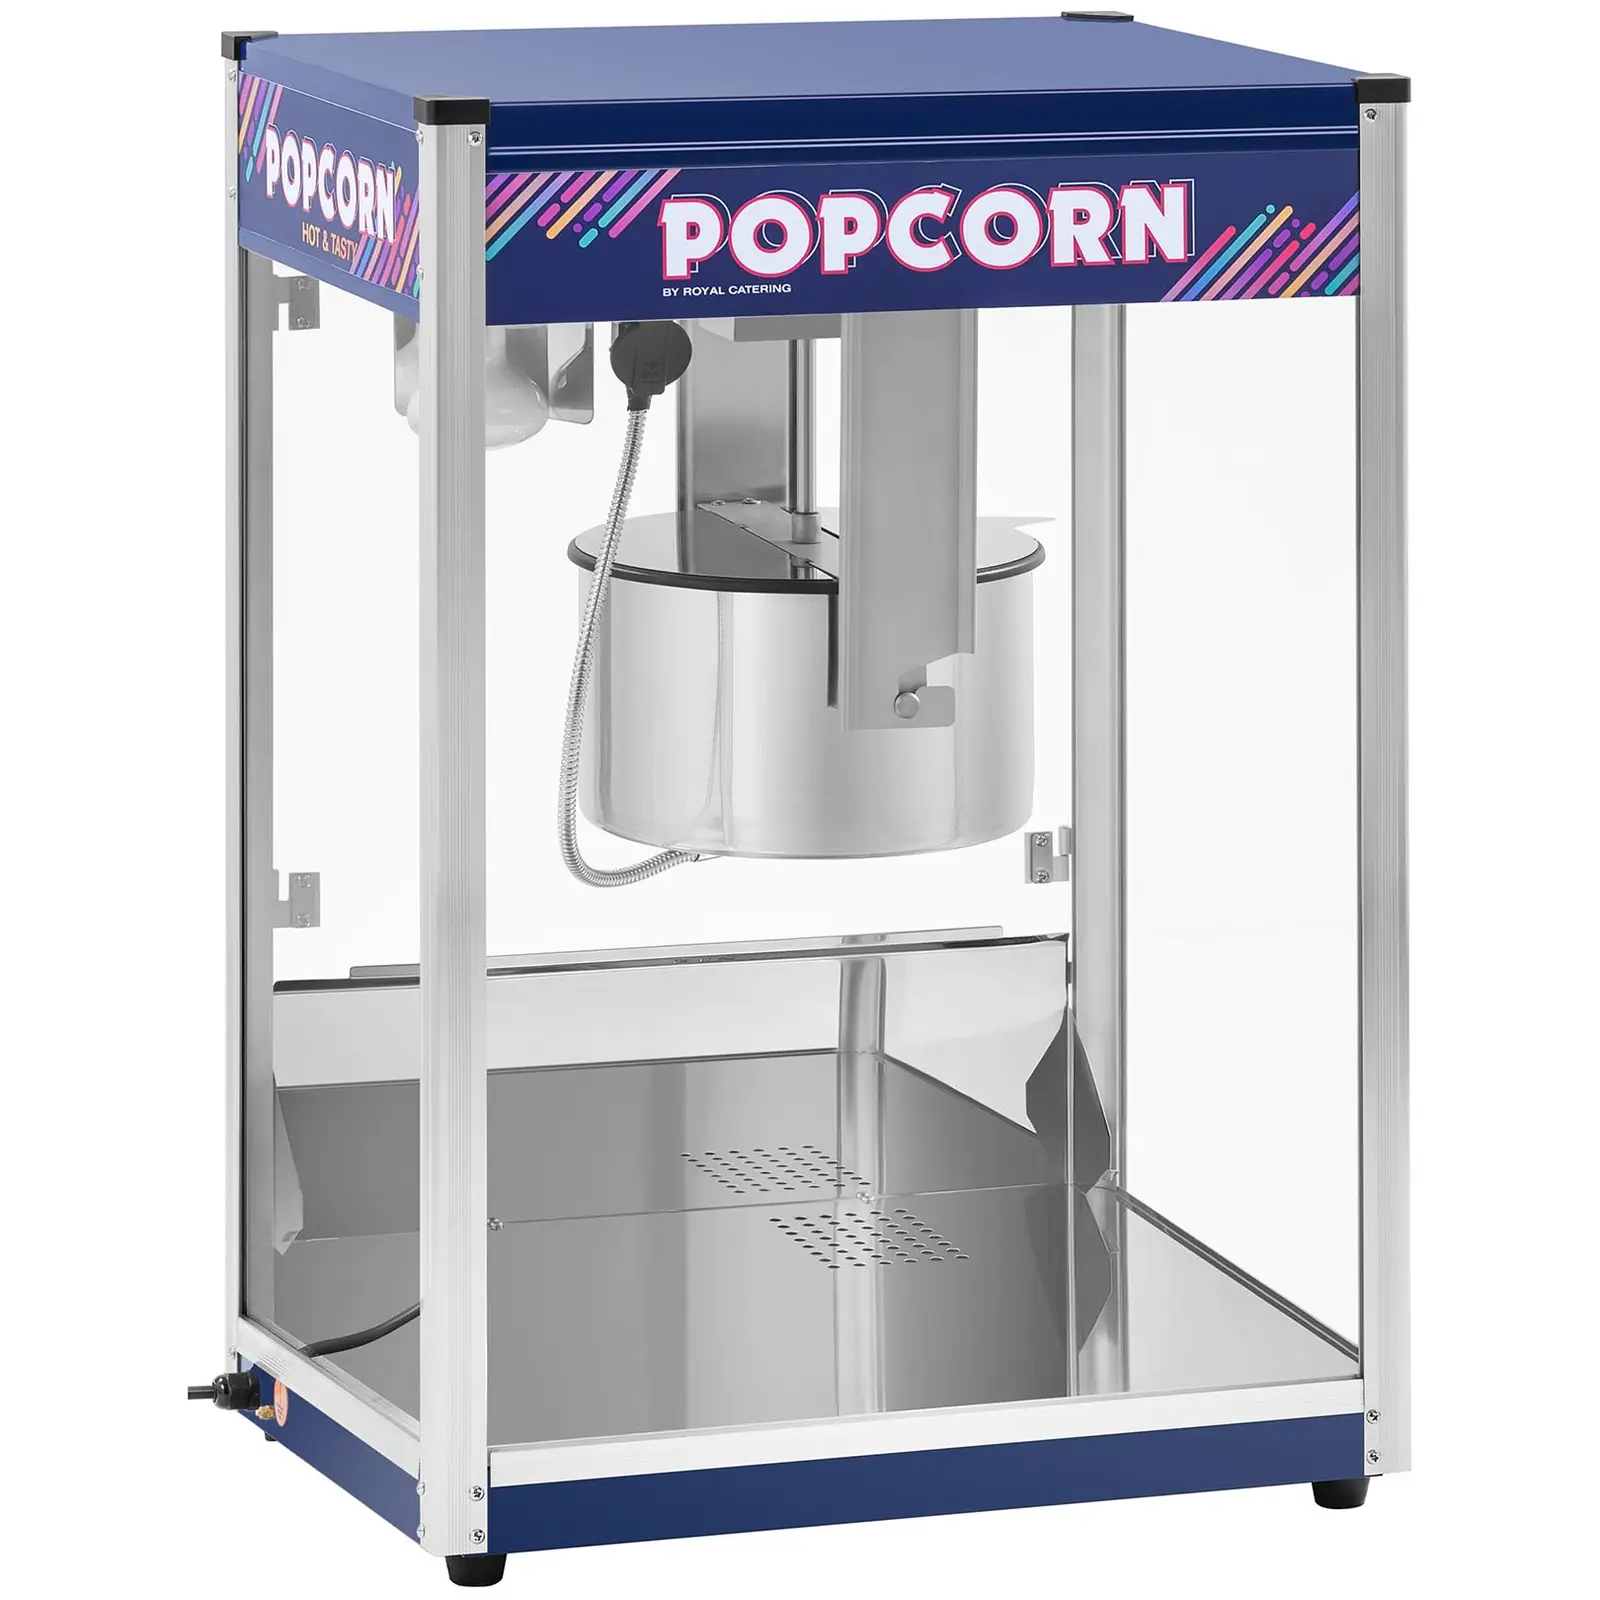 Machine à popcorn bleue - 16 oz - XXL